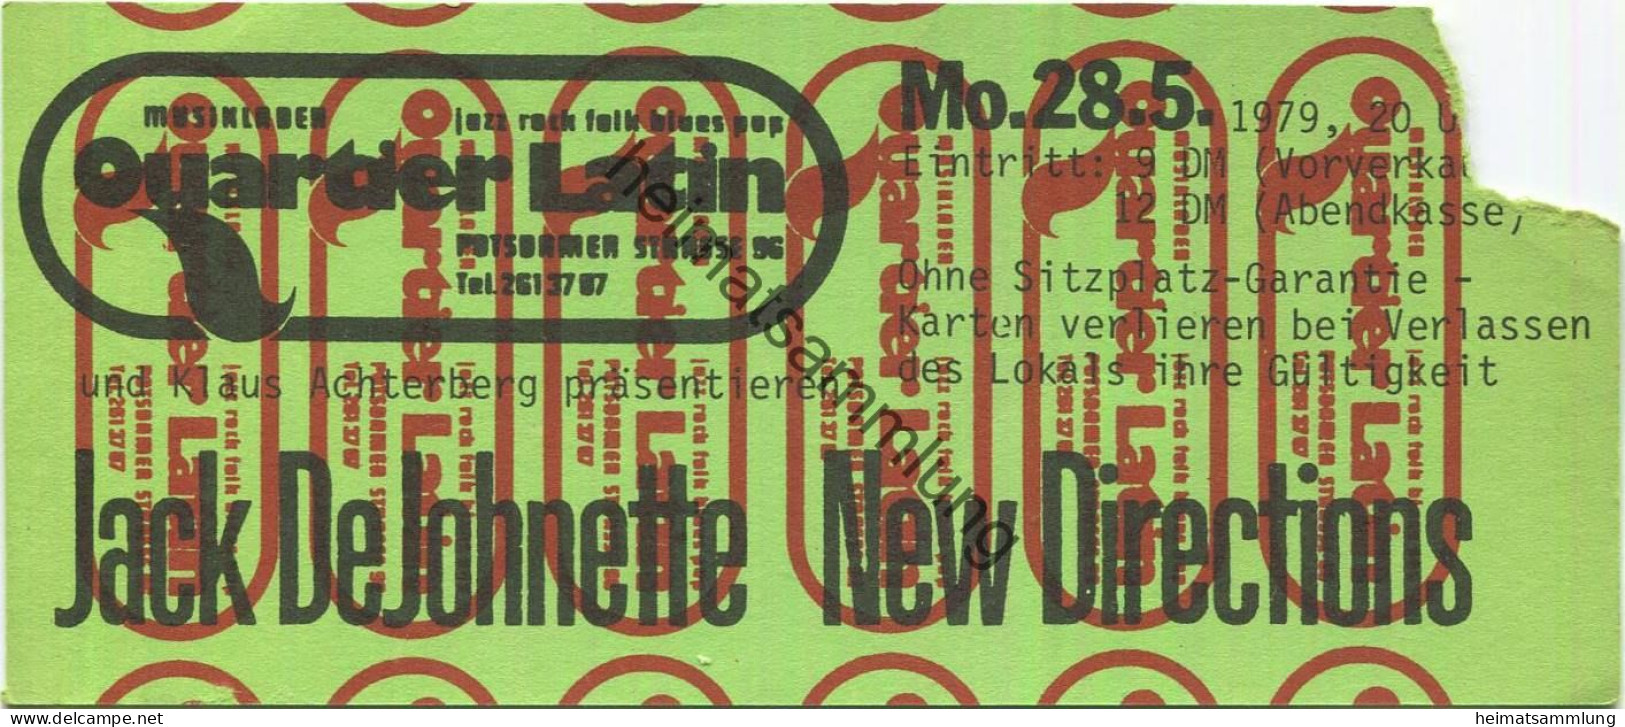 Deutschland - Berlin - Quartier Latin Und Klaus Achterberg - Jack De Johnette New Directions - Eintrittskarte 1979 - Toegangskaarten